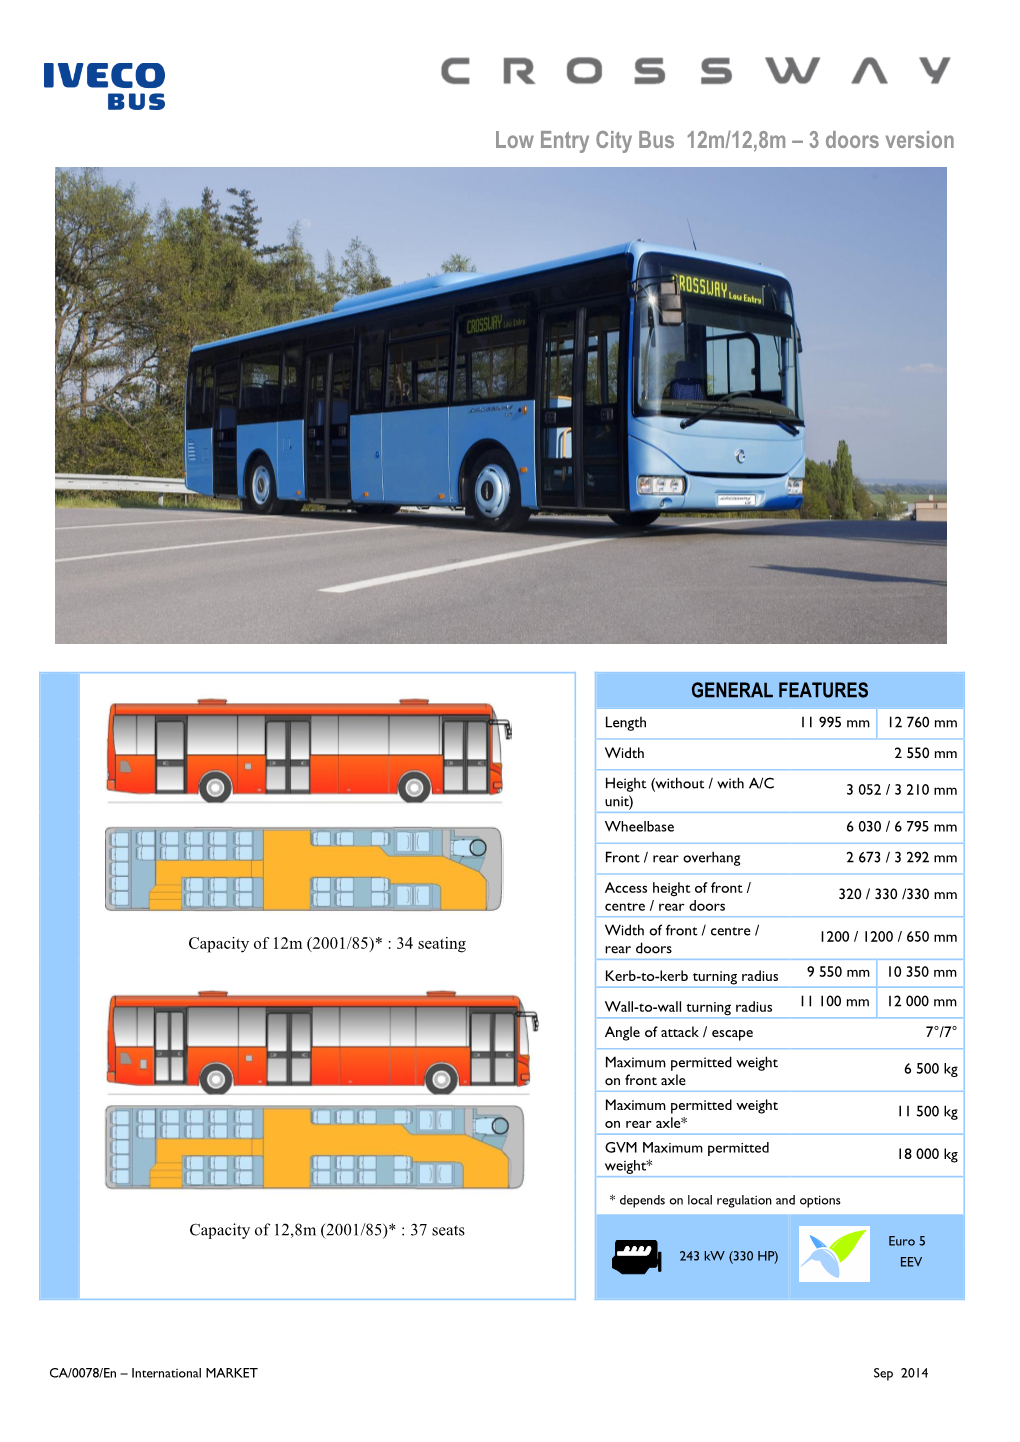 Low Entry City Bus 12M/12,8M – 3 Doors Version